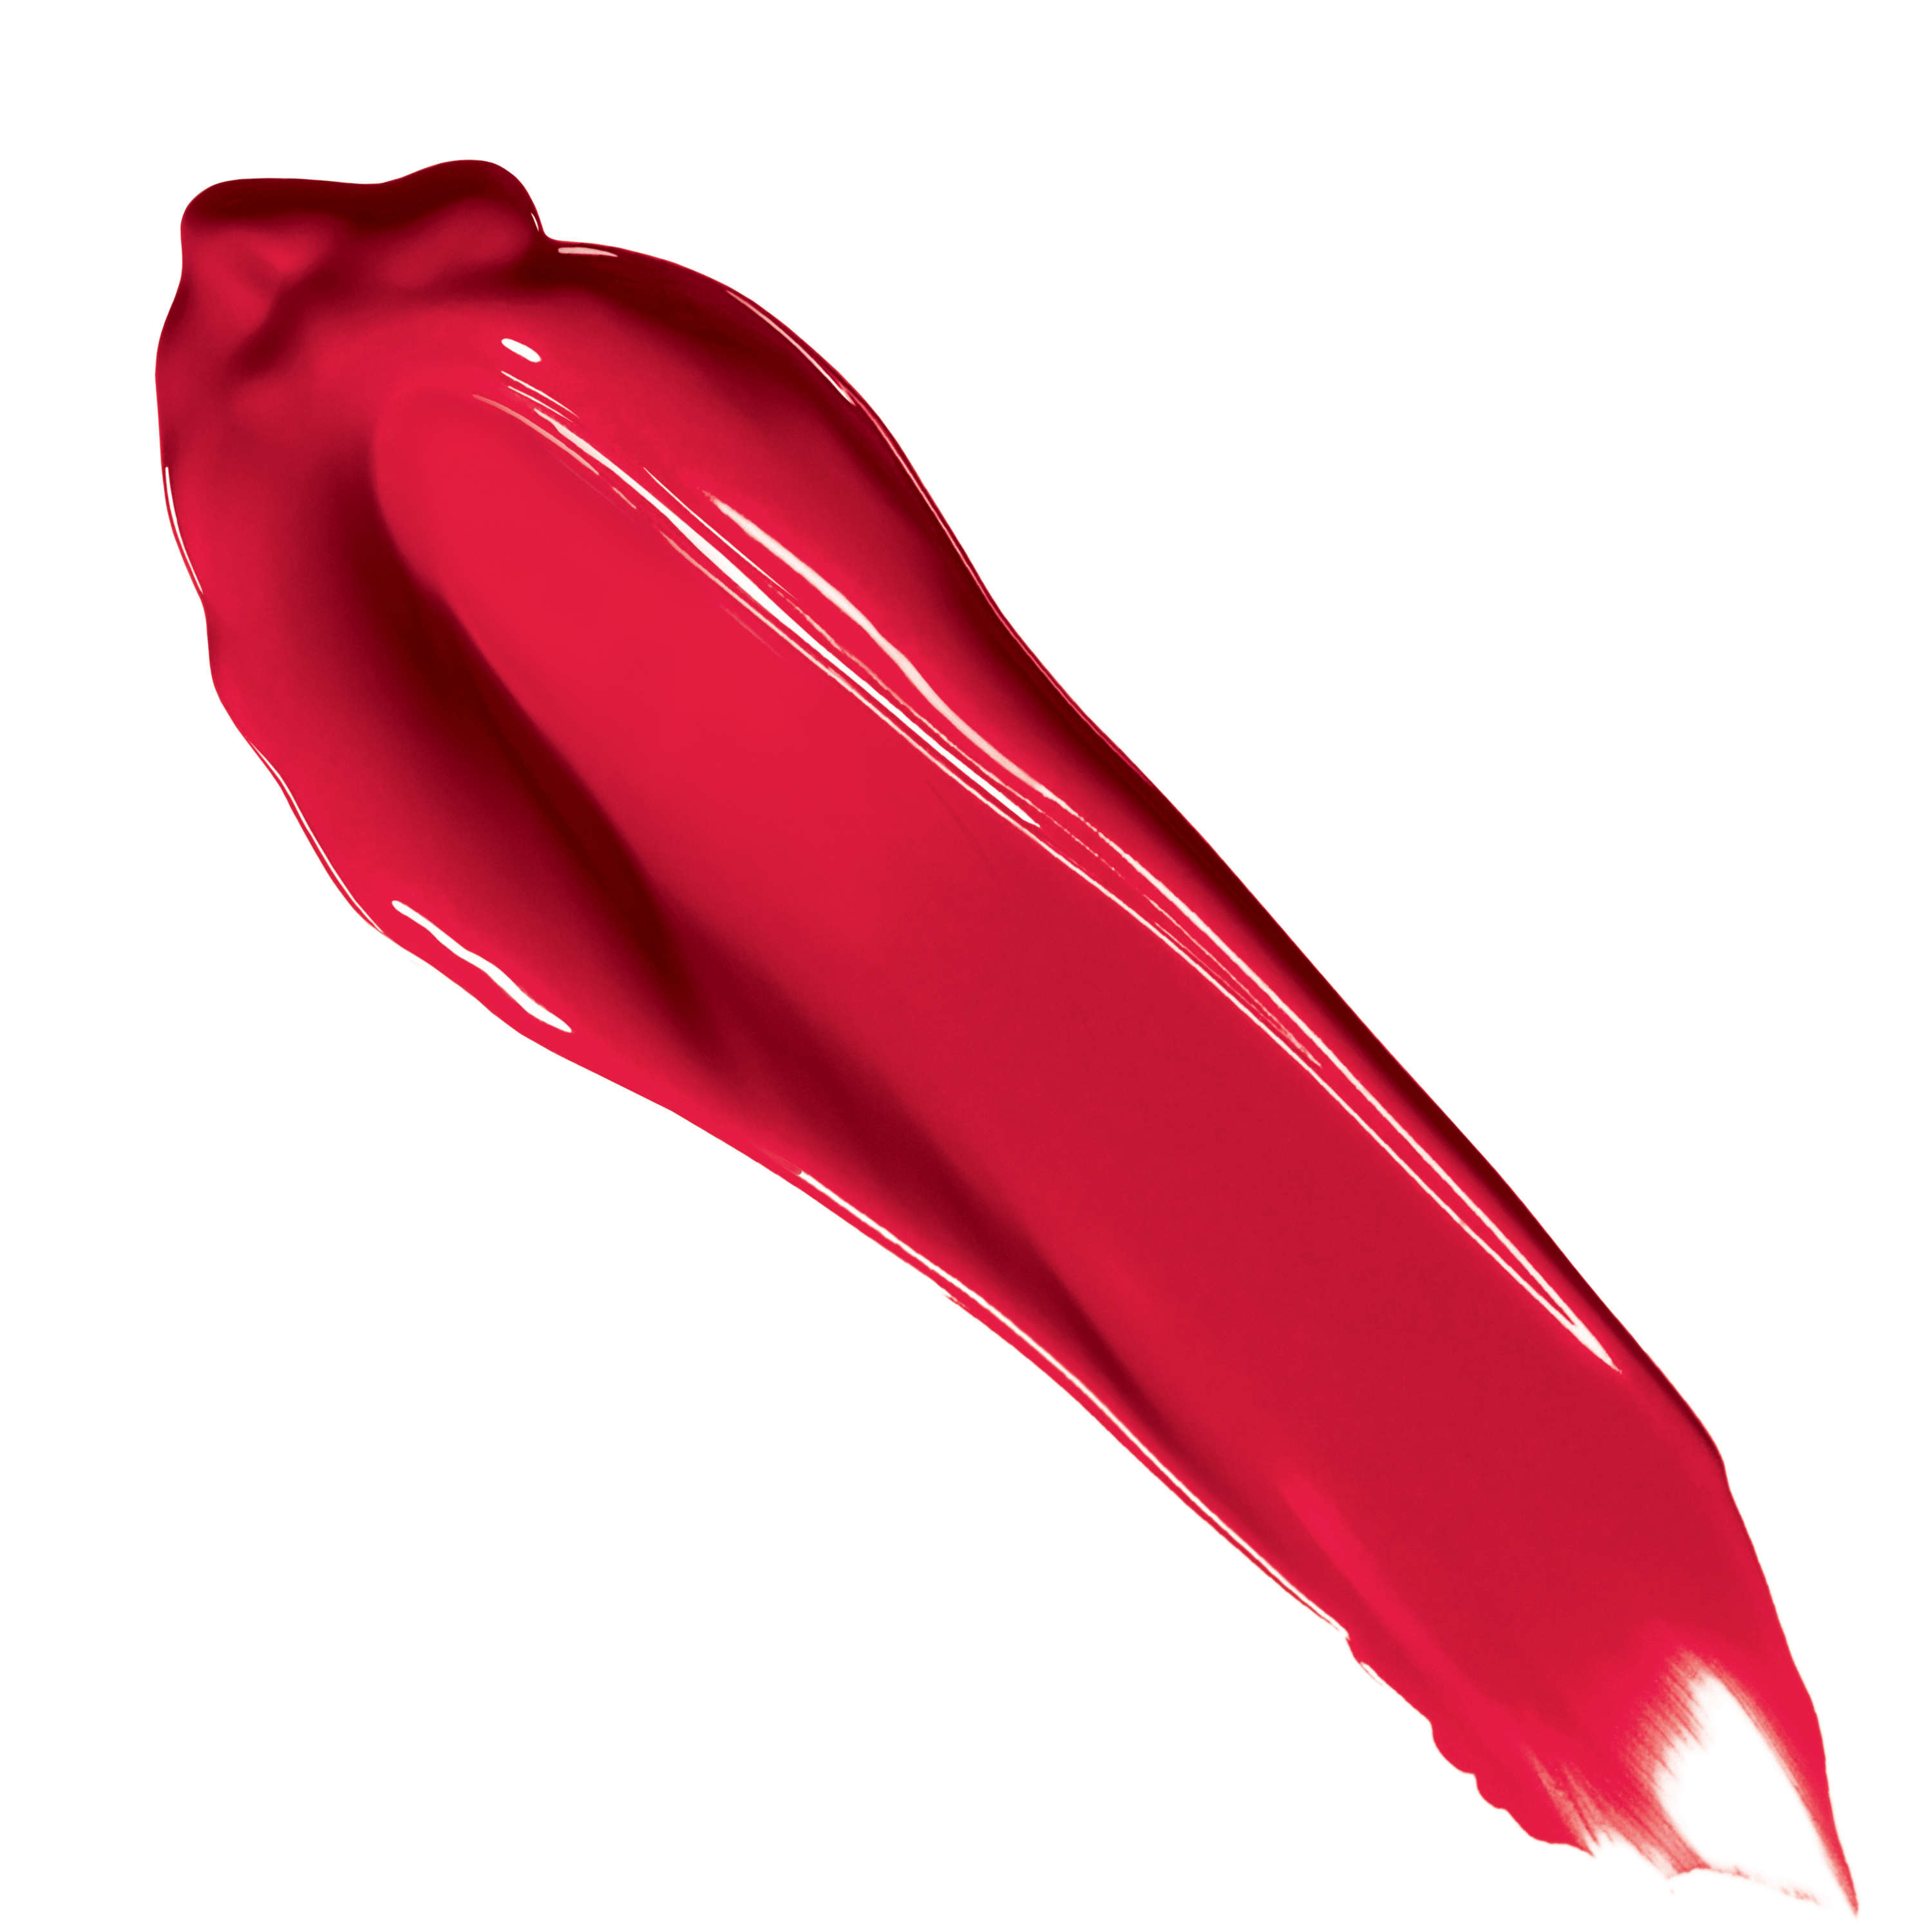 L'Oreal Paris Infallible Le Rouge Lipstick, Ravishing Red - image 2 of 4